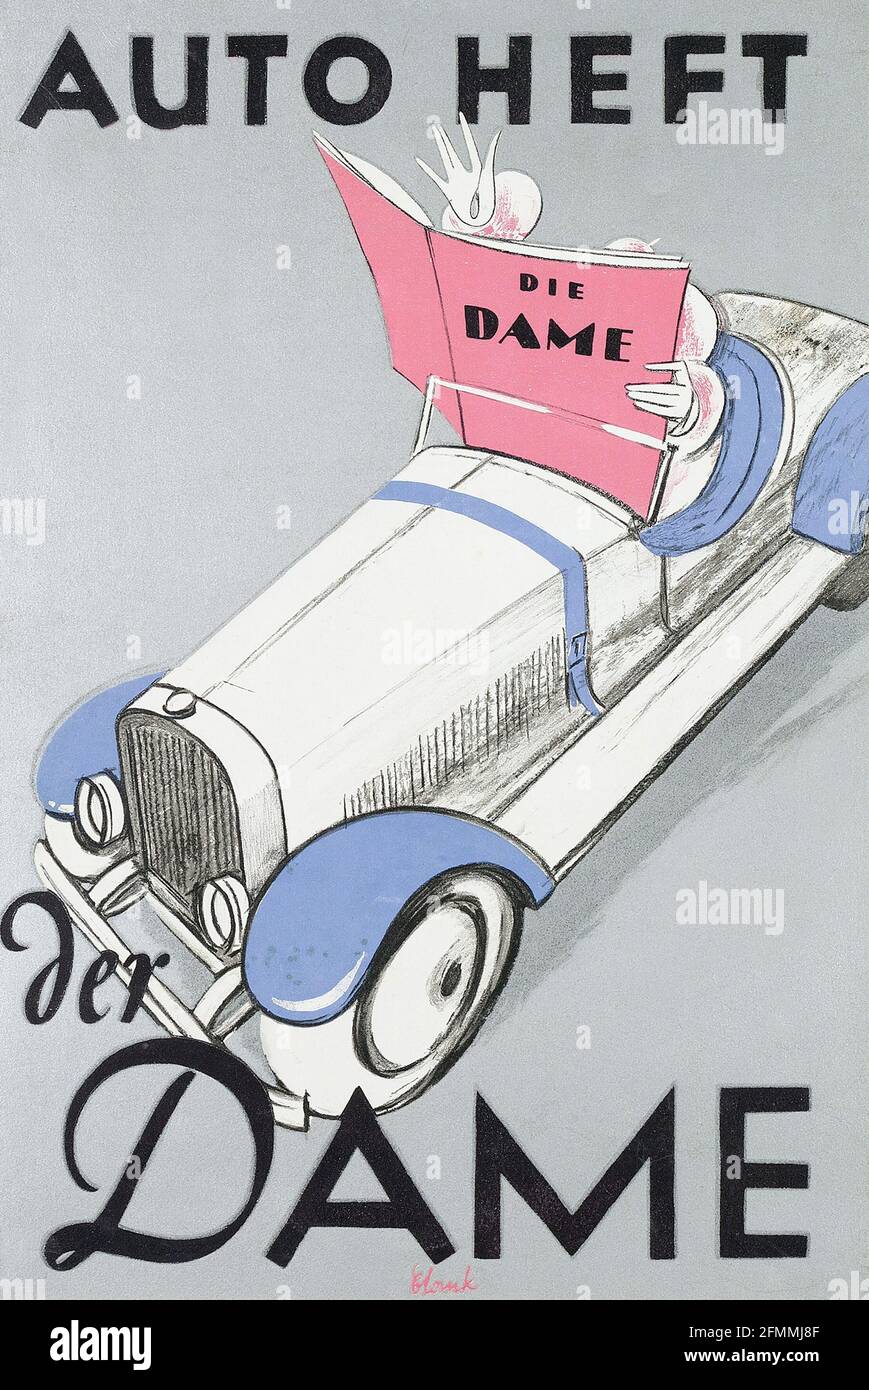 Vintage Auto Heft Der Dame Advertising Poster, After Clomk, Circa 1930 Stock Photo